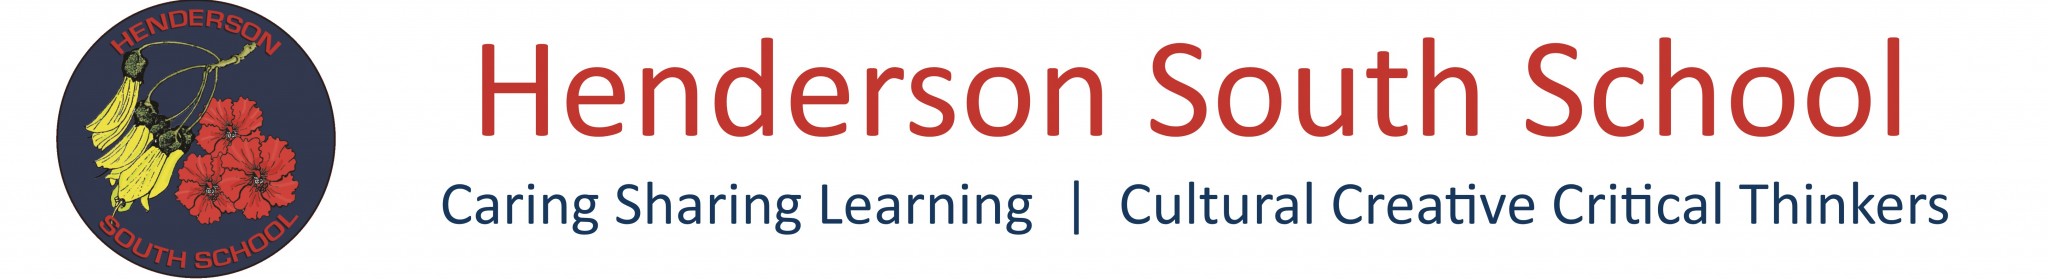 Henderson South School Logo